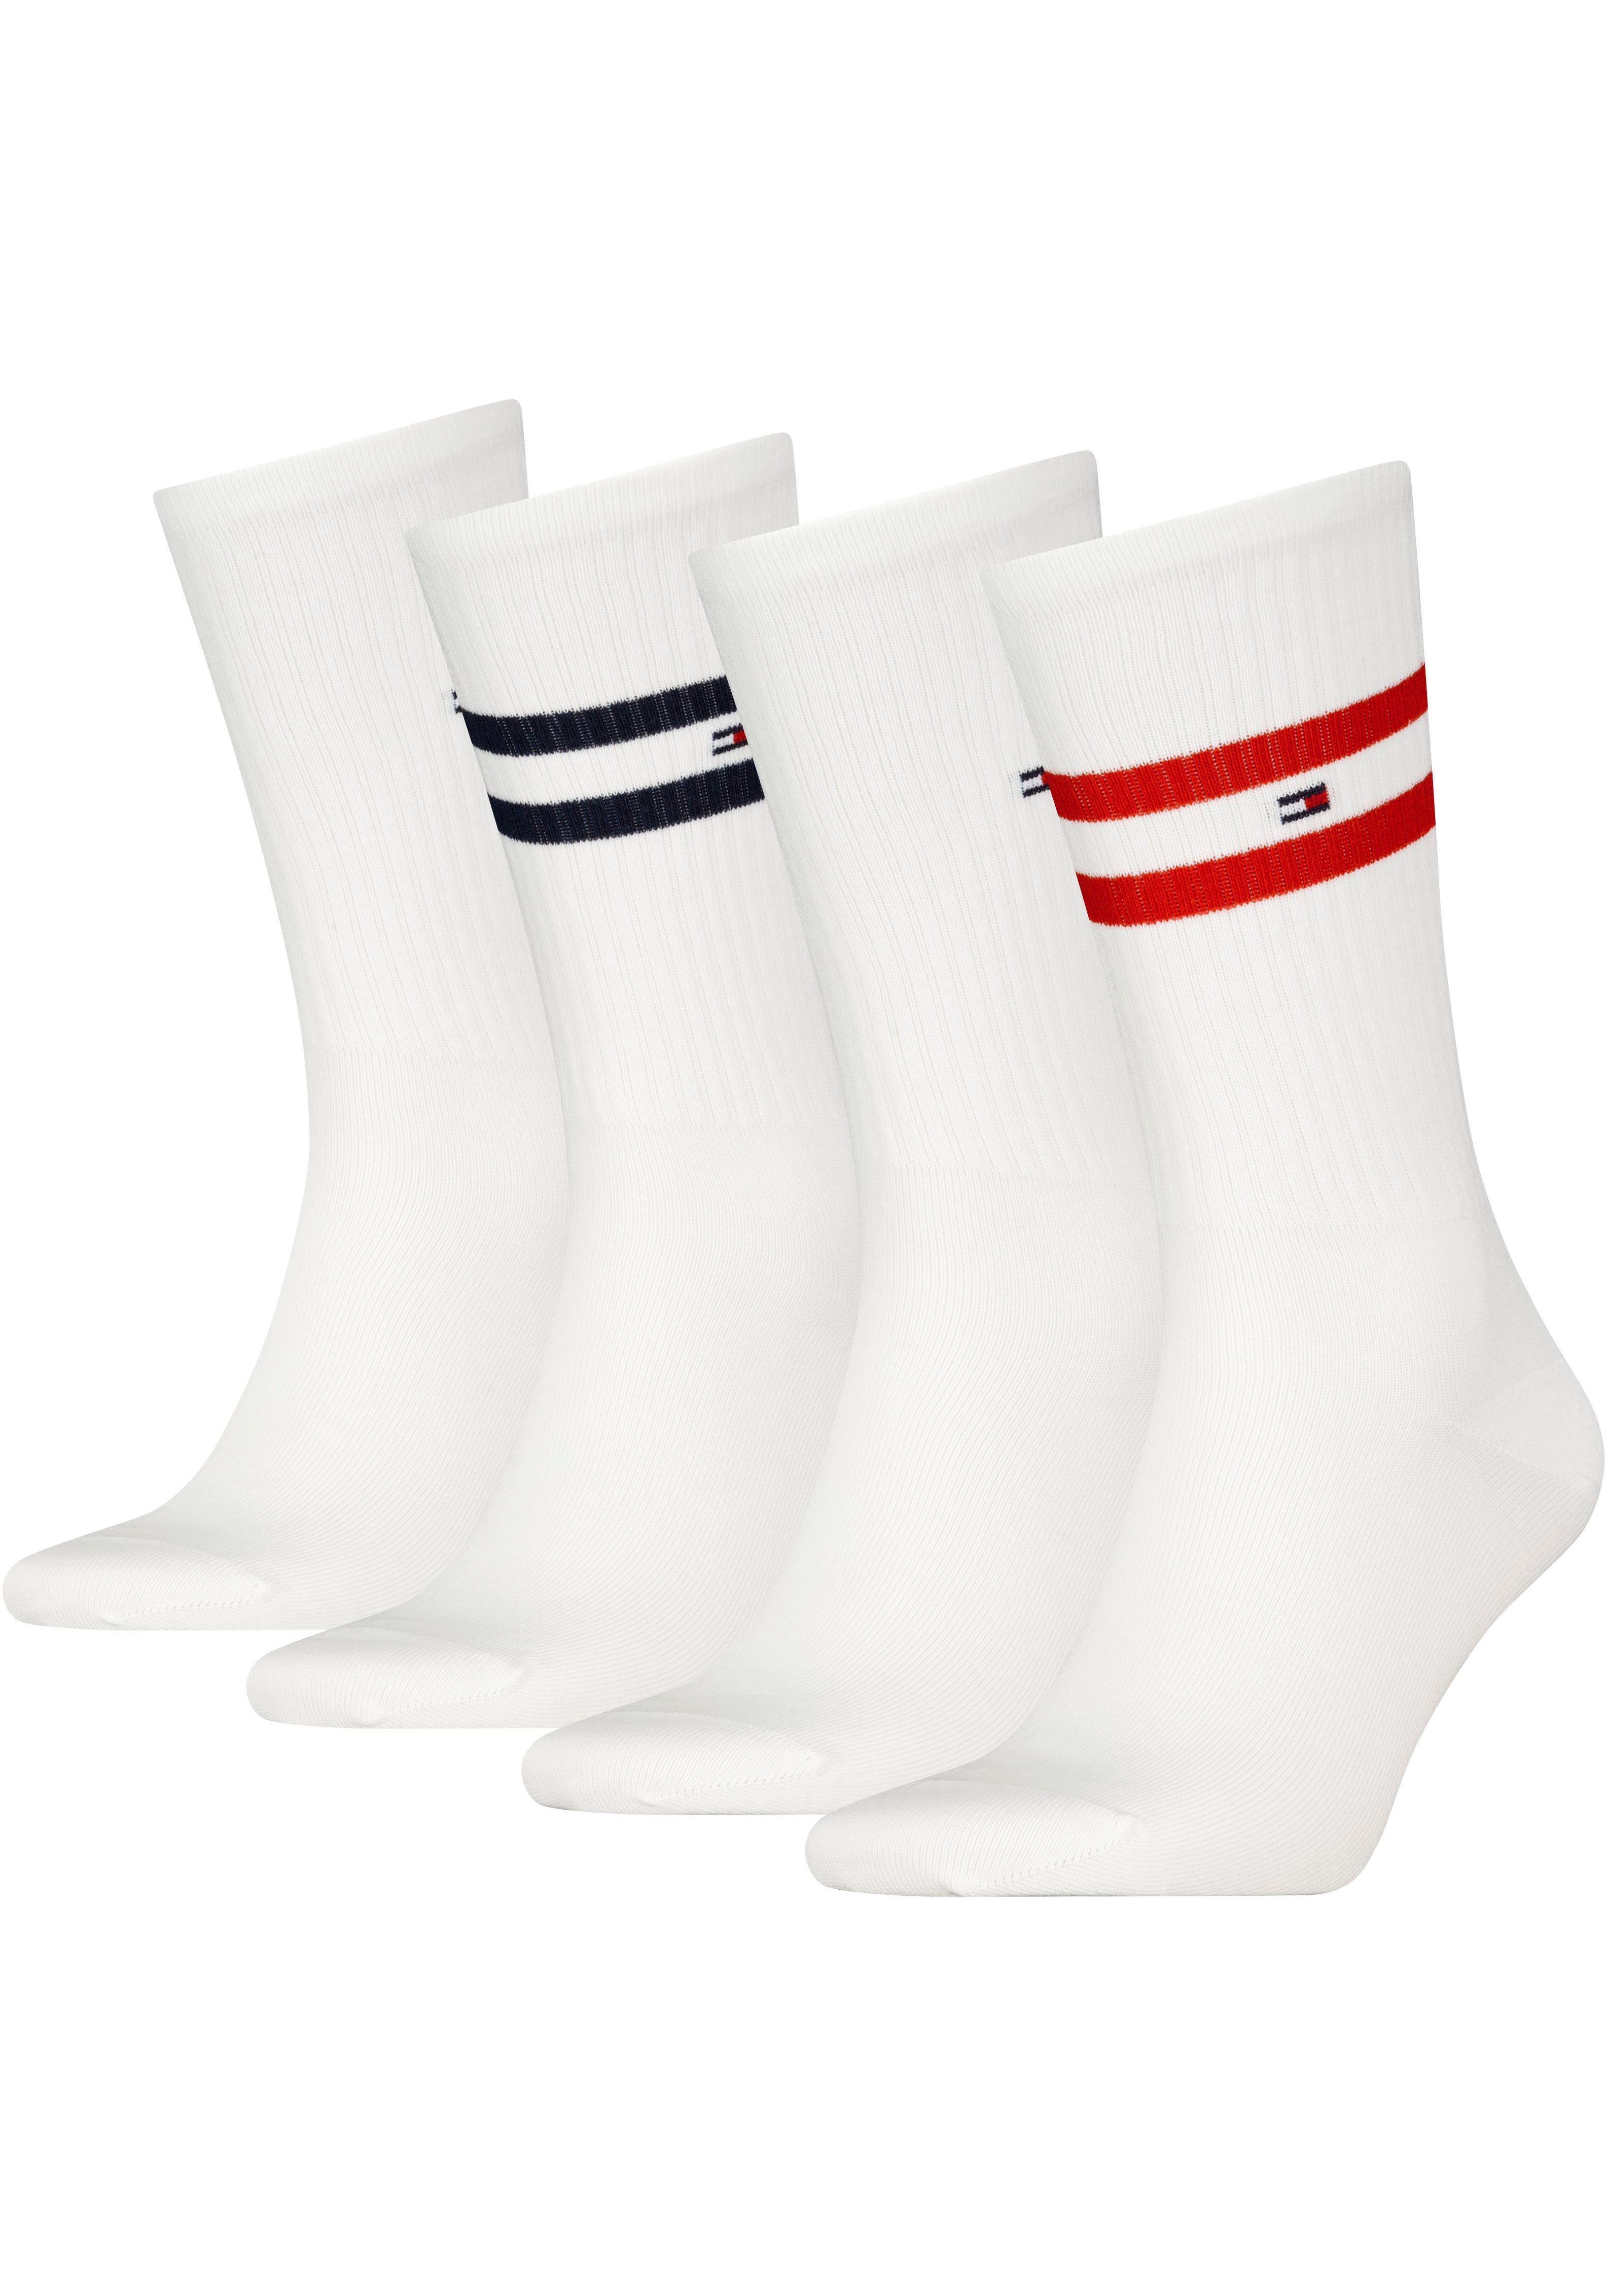 Tommy Hilfiger giftbox sokken set van 4 wit